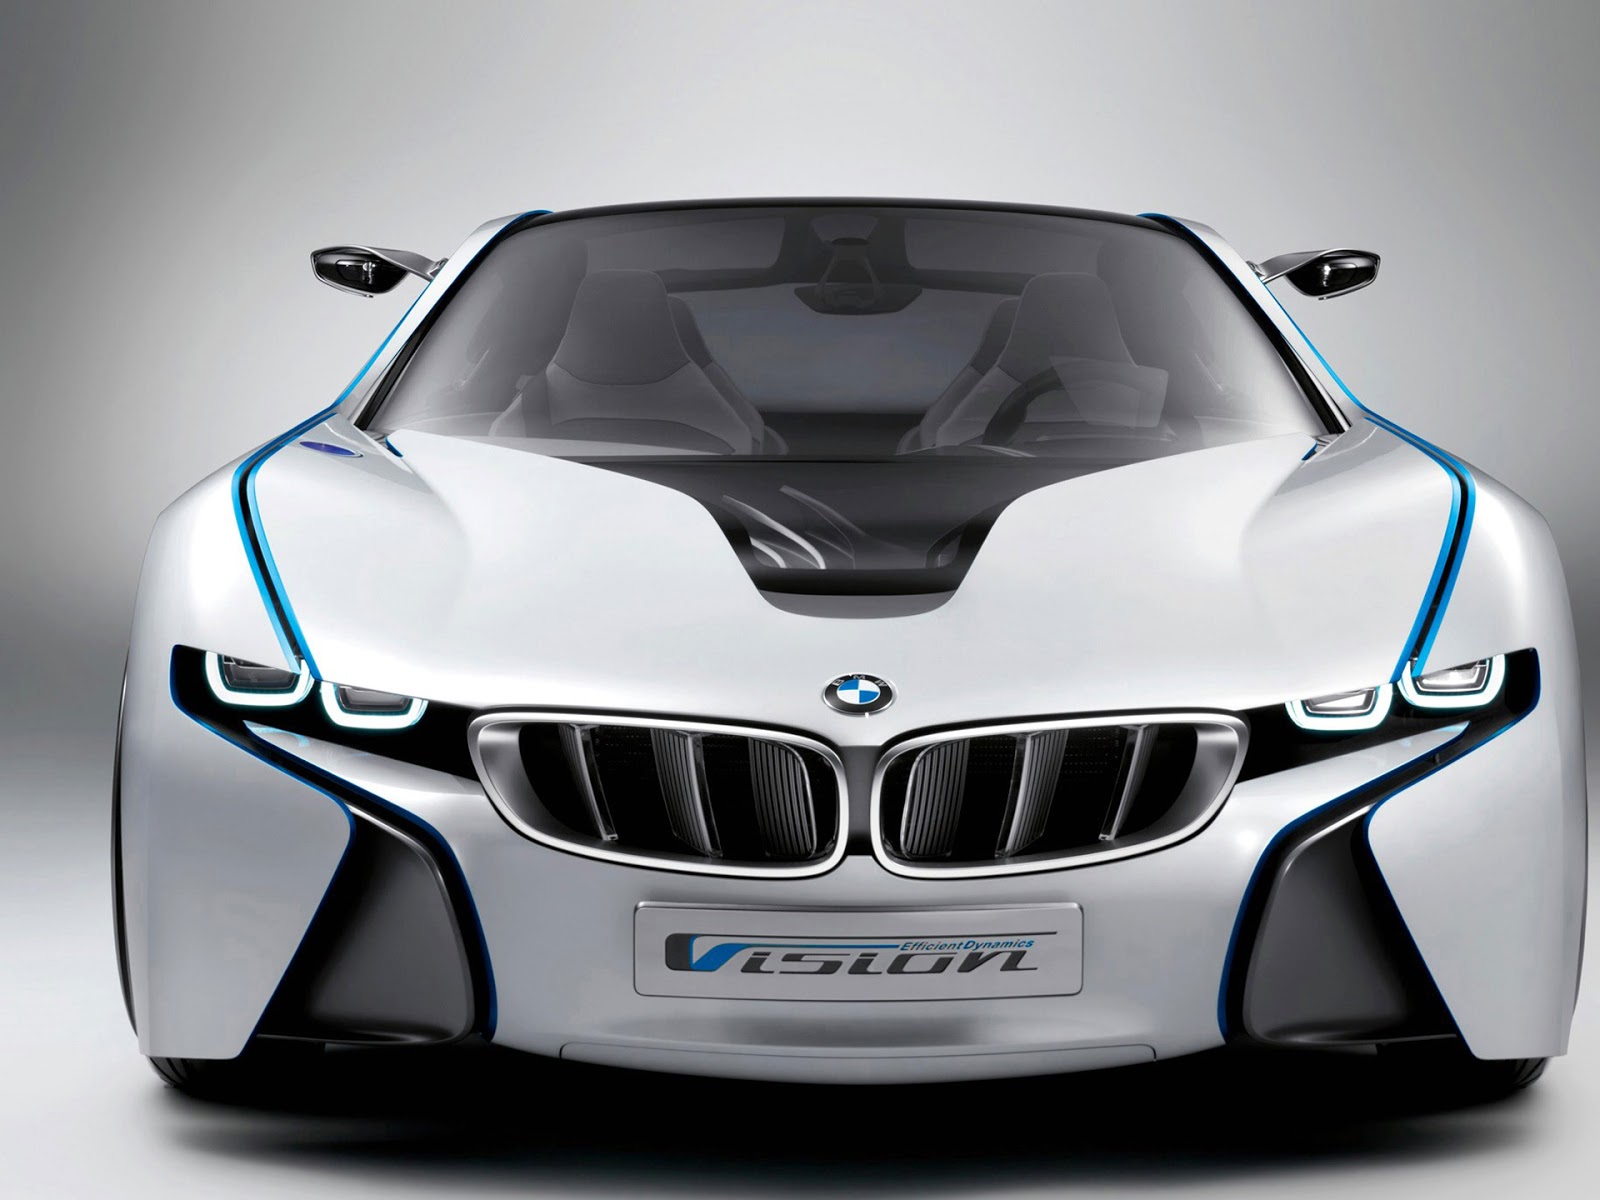 Auto Cars Wallpapers 2013: 2013 BMW Vision Efficient Dynamics Concept